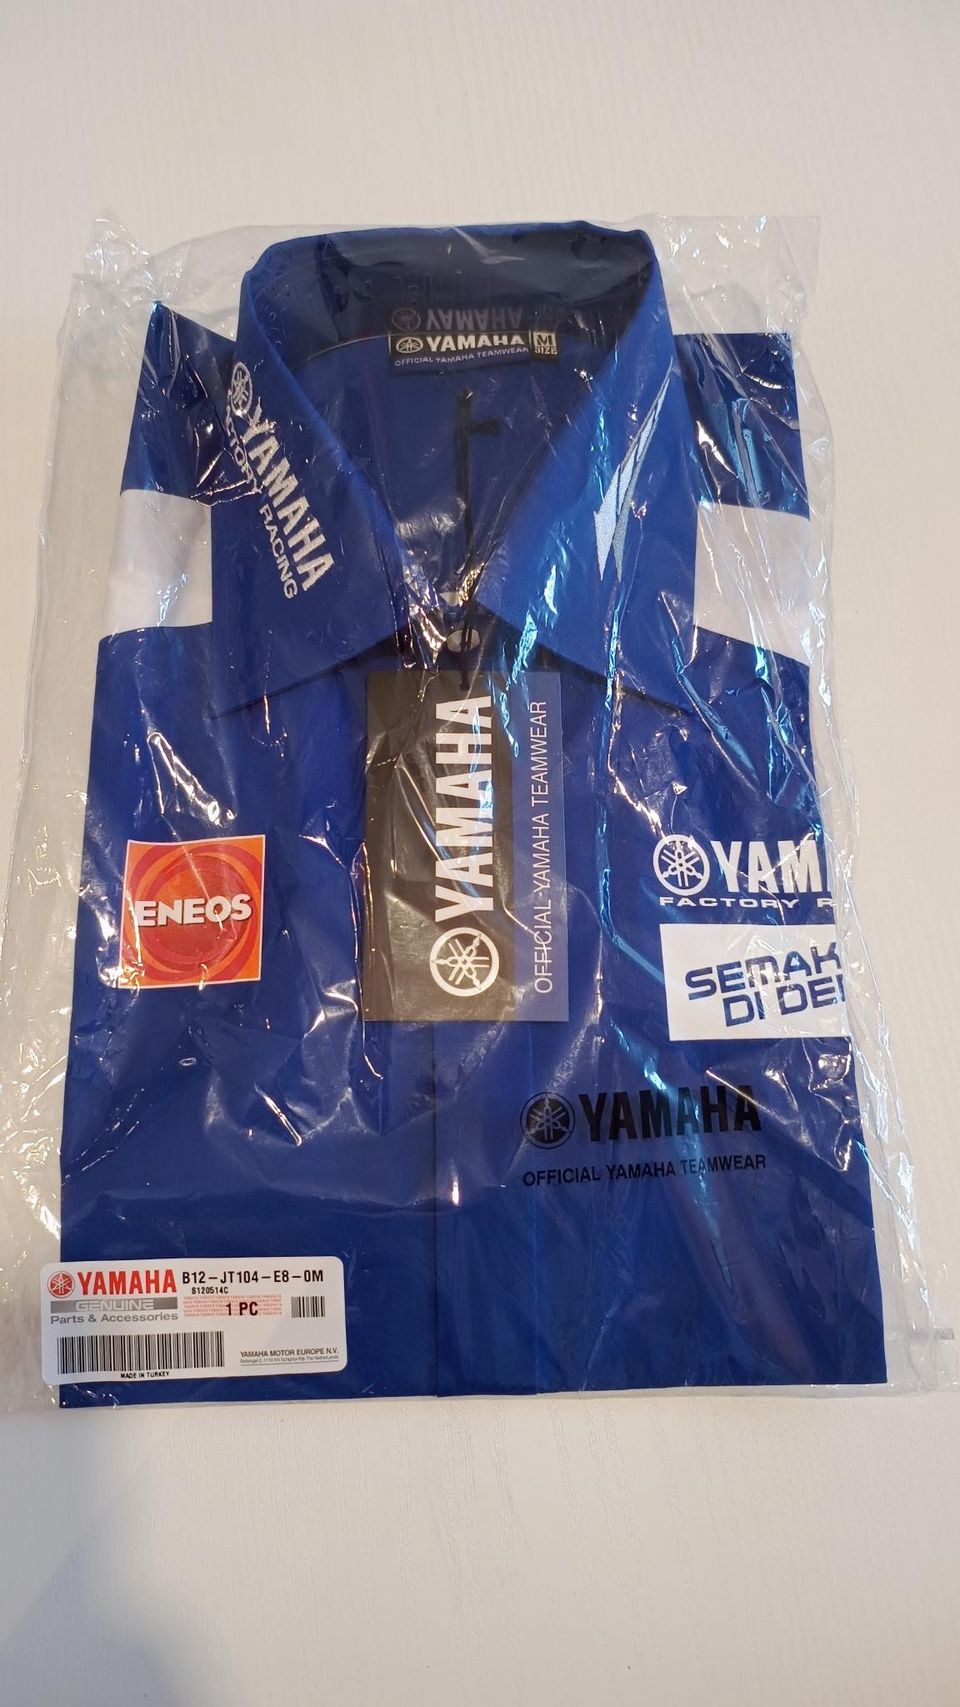 Yamaha Official Teamwear kauluspaita M